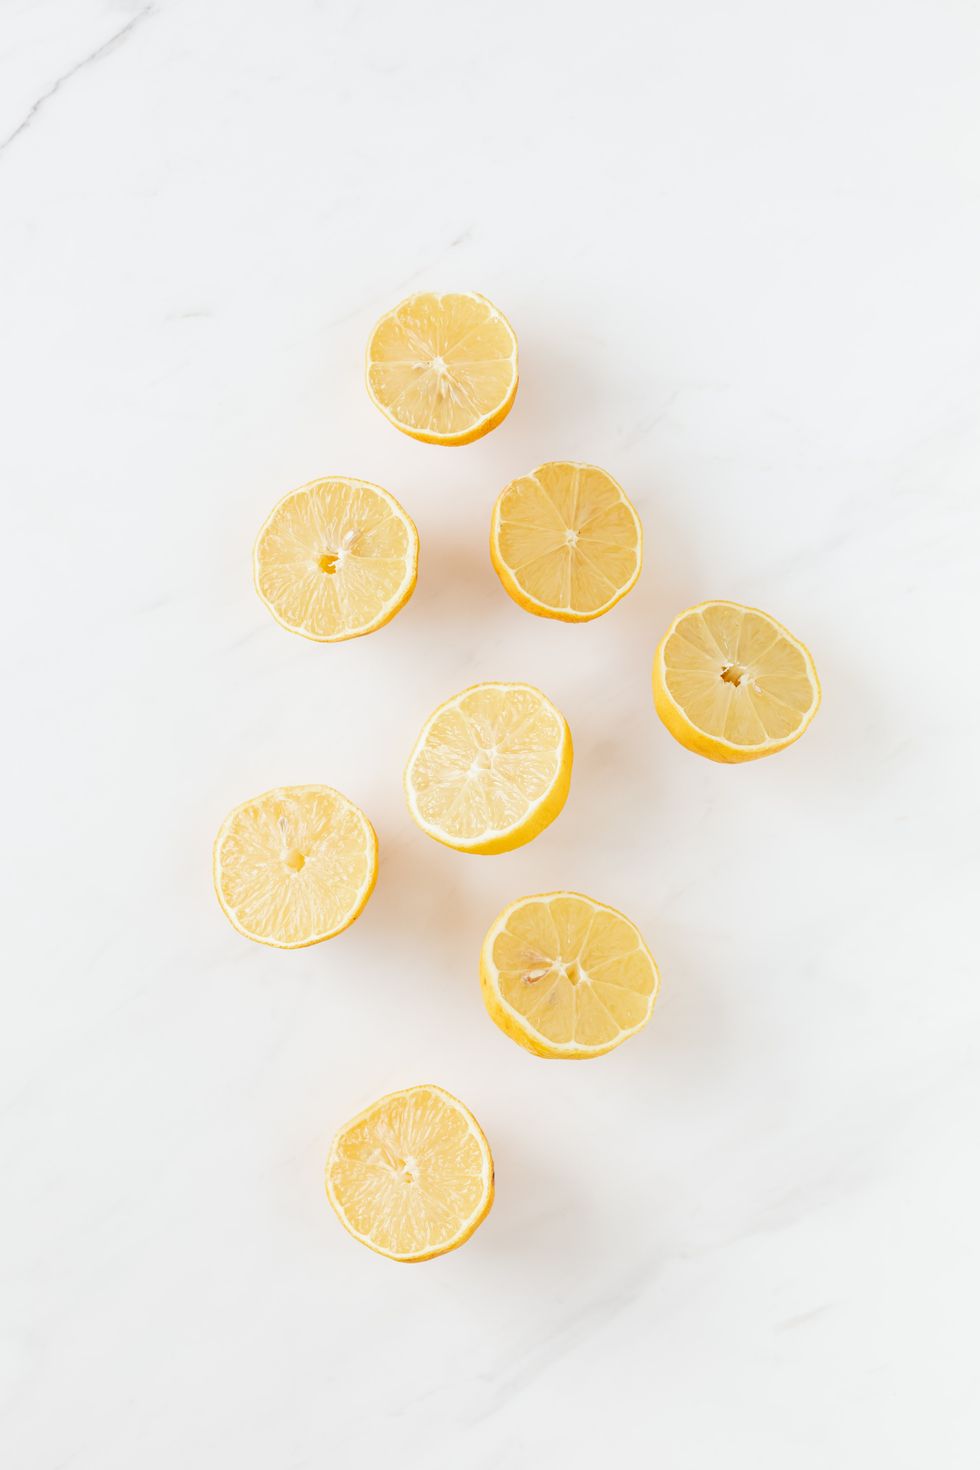 lemon slices arranged on a white background